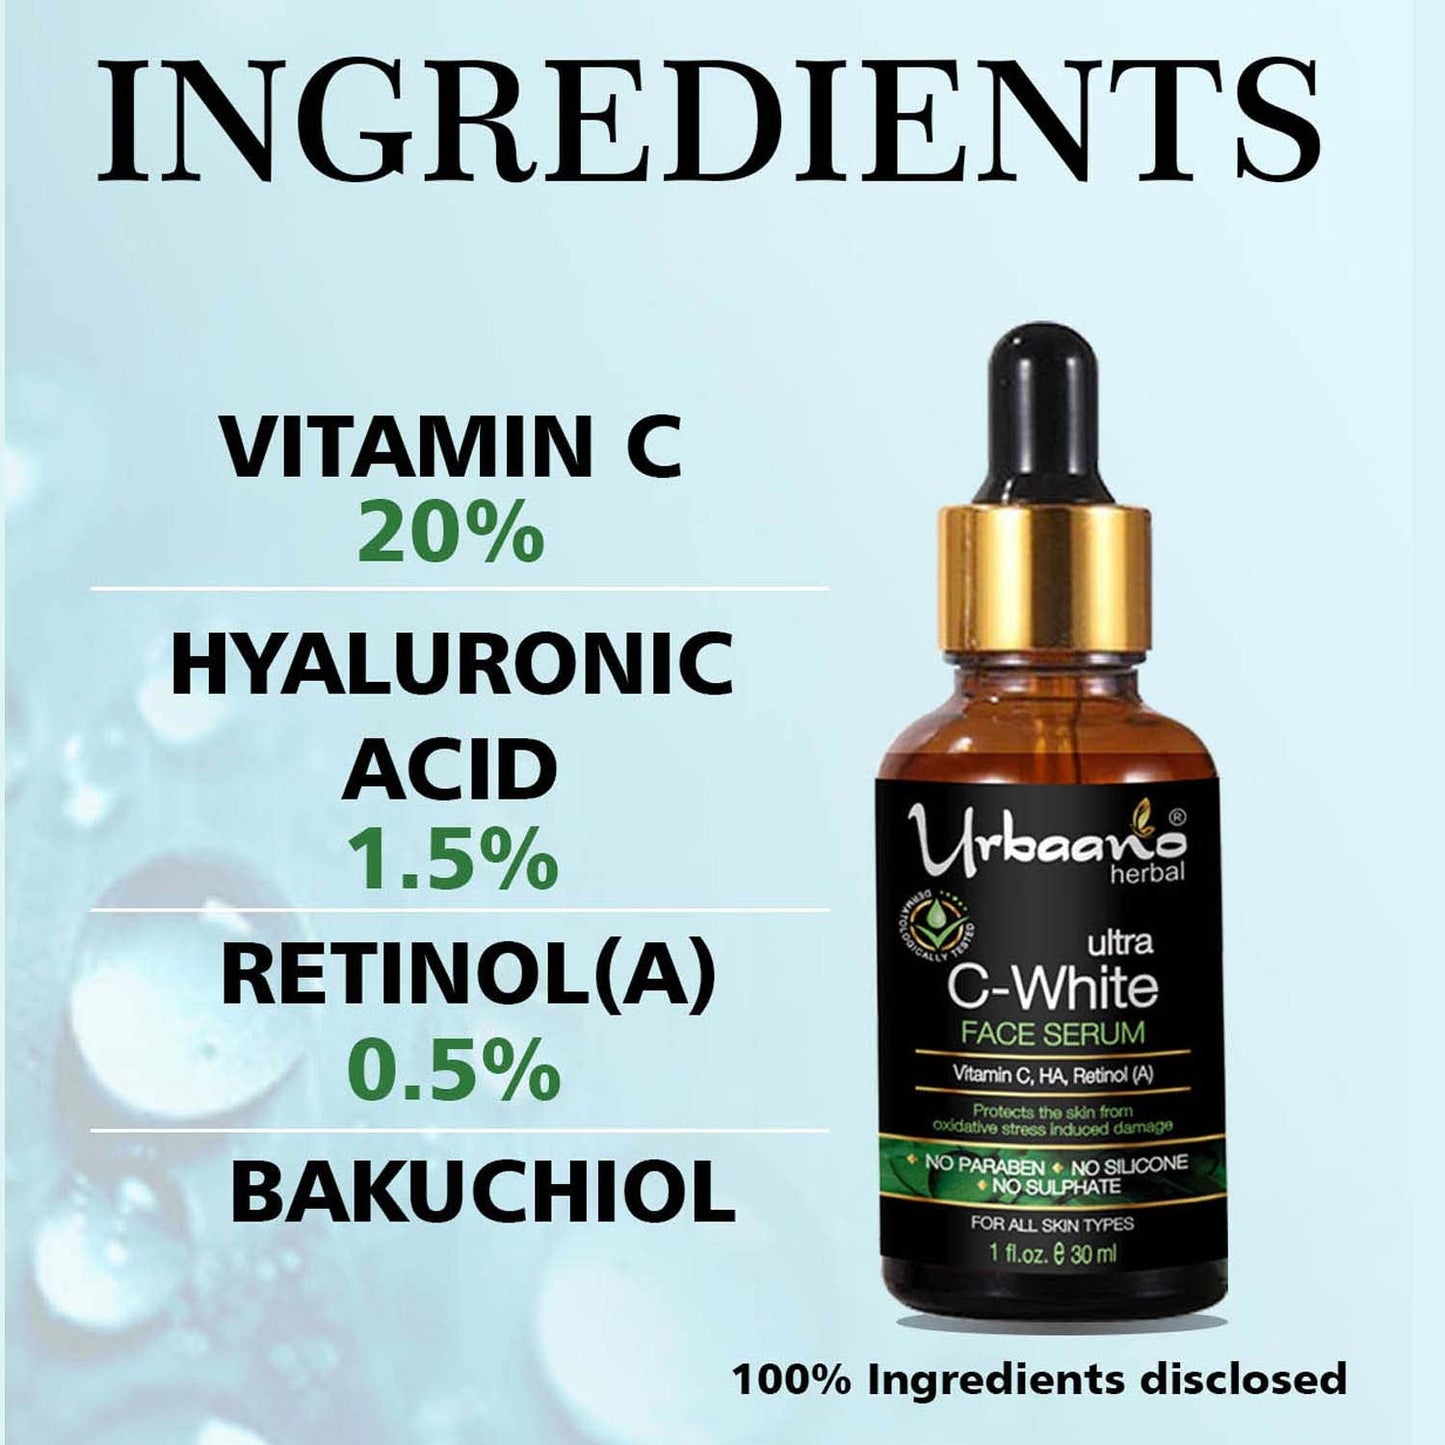 urbaano herbal vitamn c de tan vitamn c face serum with hyaluronic acid, retinol for bright illuminating skin